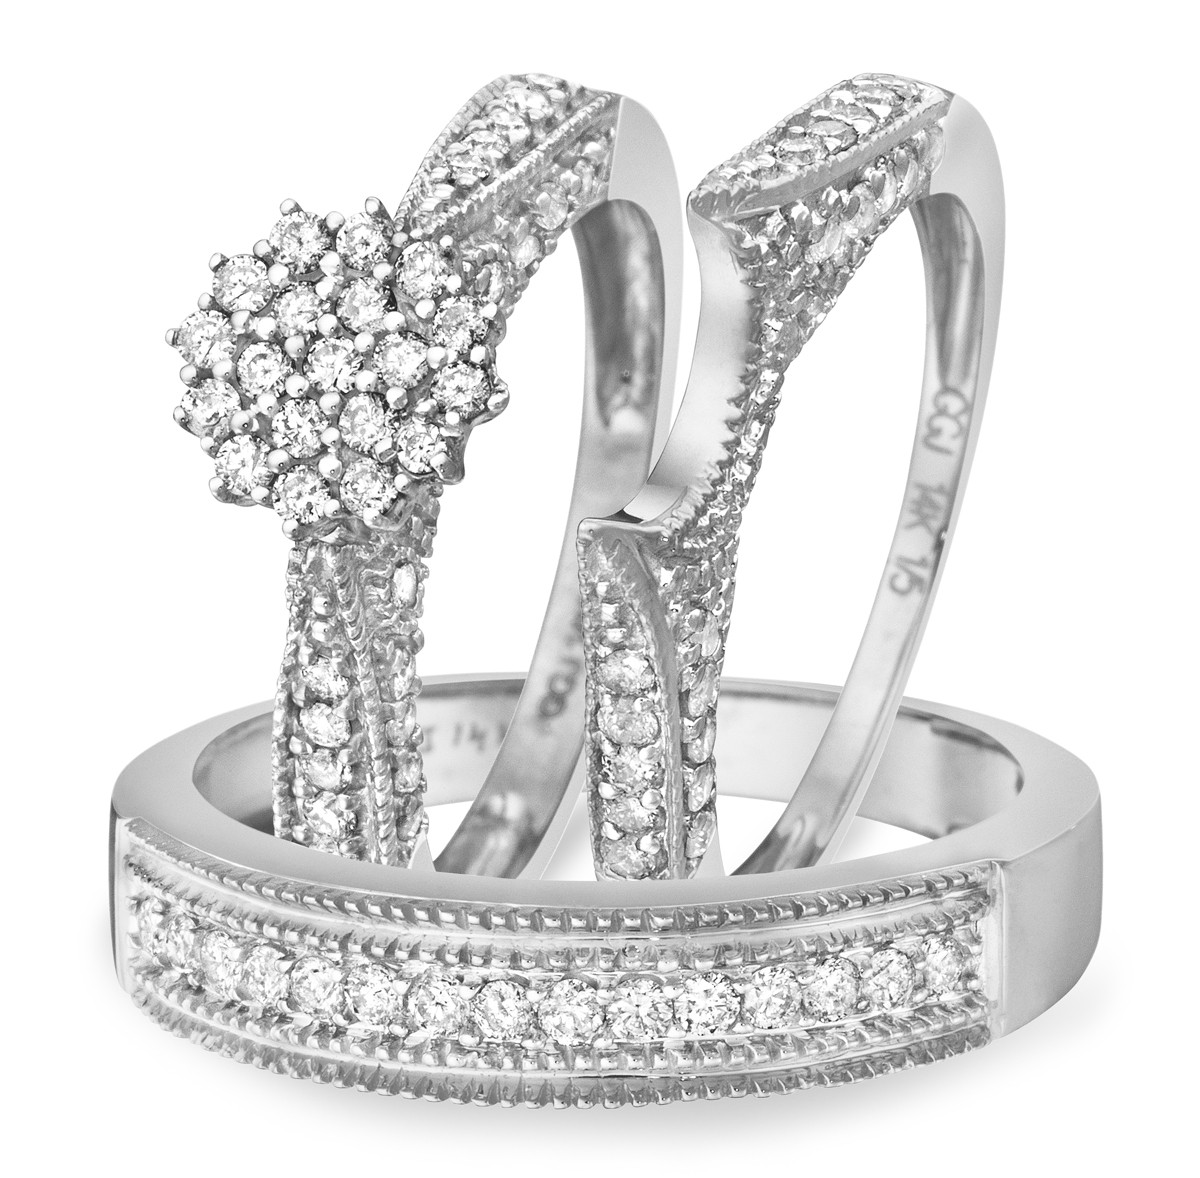 White Gold Wedding Bands Sets
 1 Carat Diamond Trio Wedding Ring Set 14K White Gold